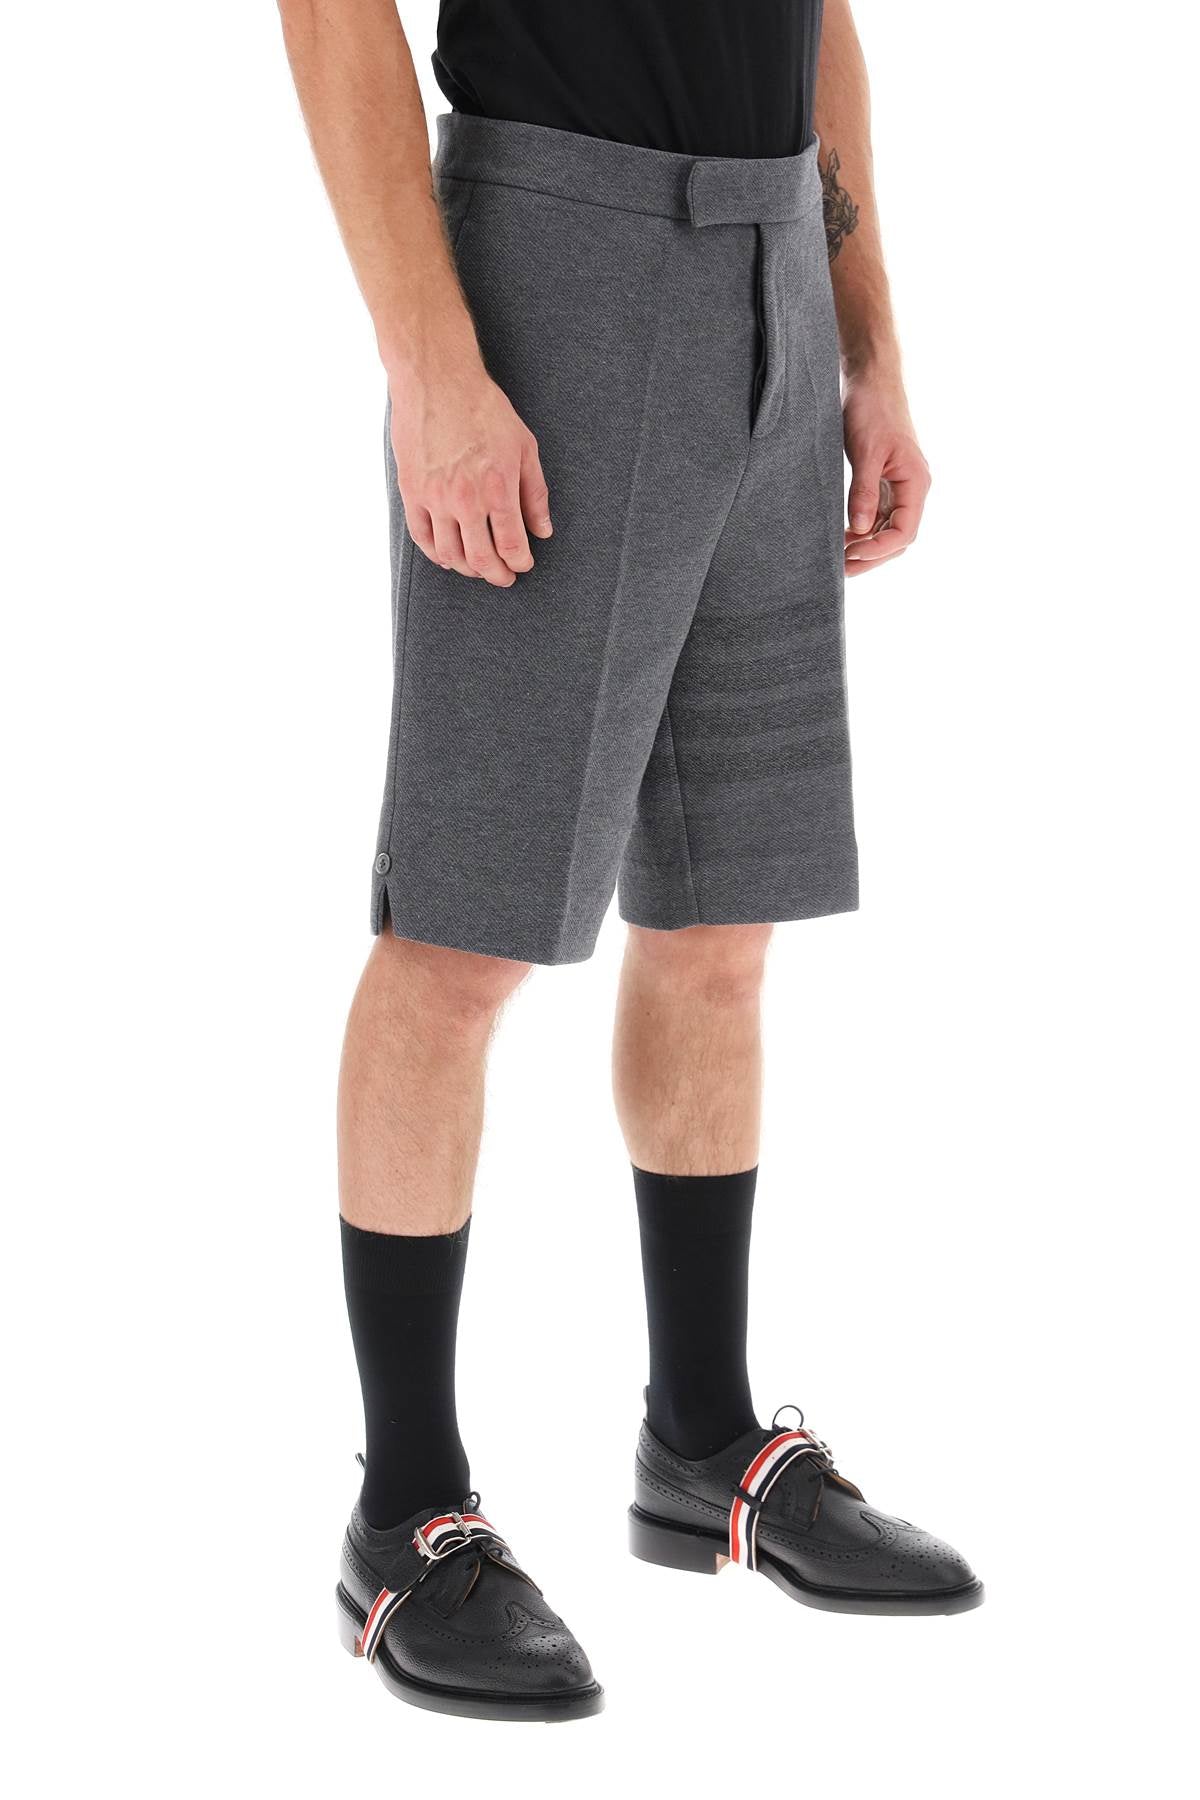 Thom browne shorts with 4-bar motif-1